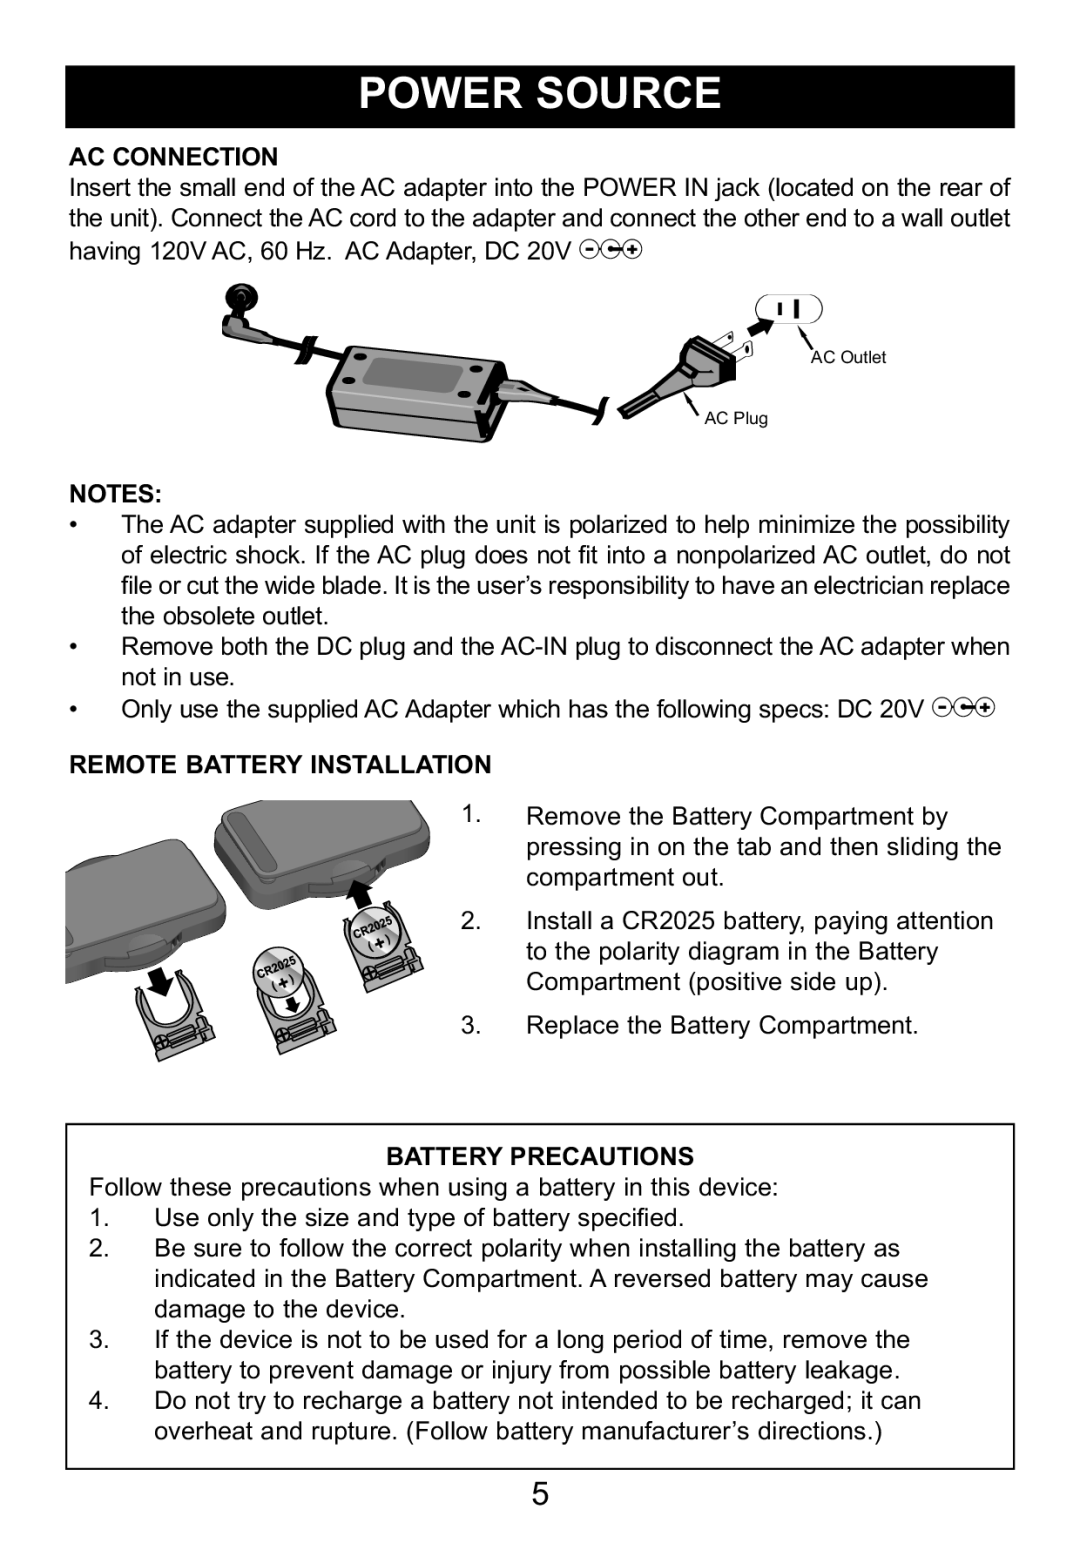 Memorex Mi1006 manual Ac Connection, Remote Battery Installation, Battery Precautions 